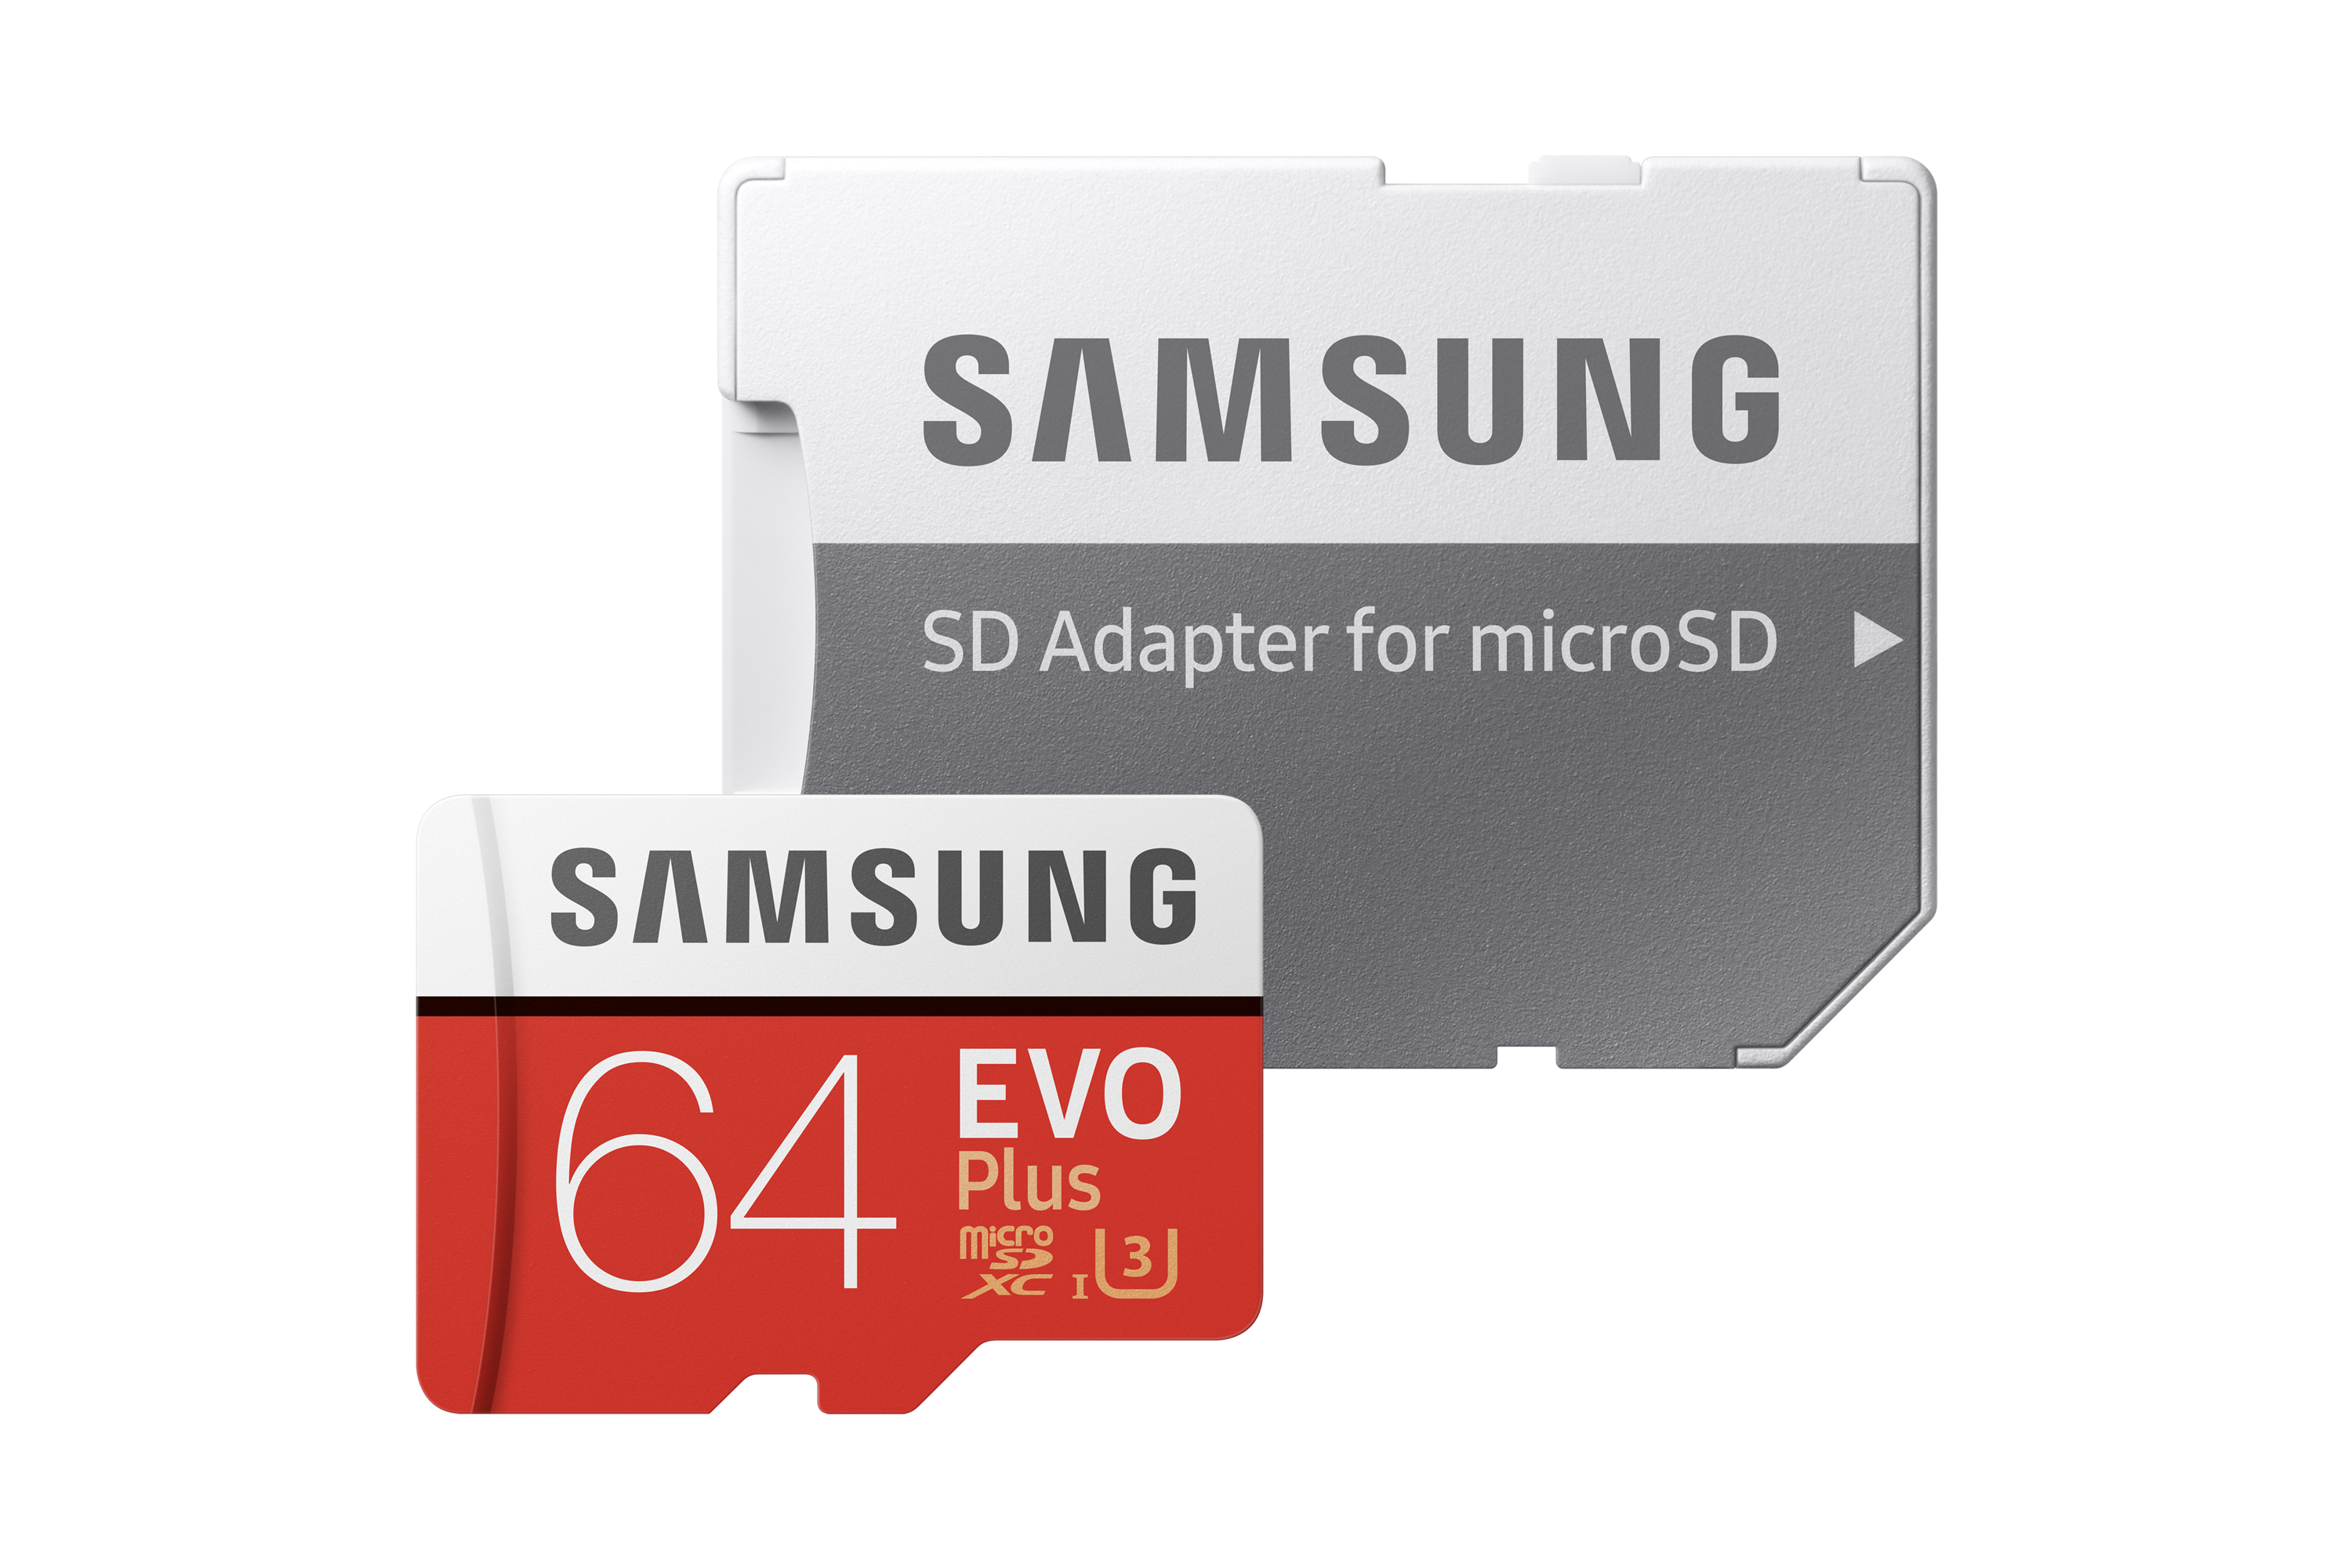 Samsung EVO Plus 64GB Micro SDXC geheugenkaart